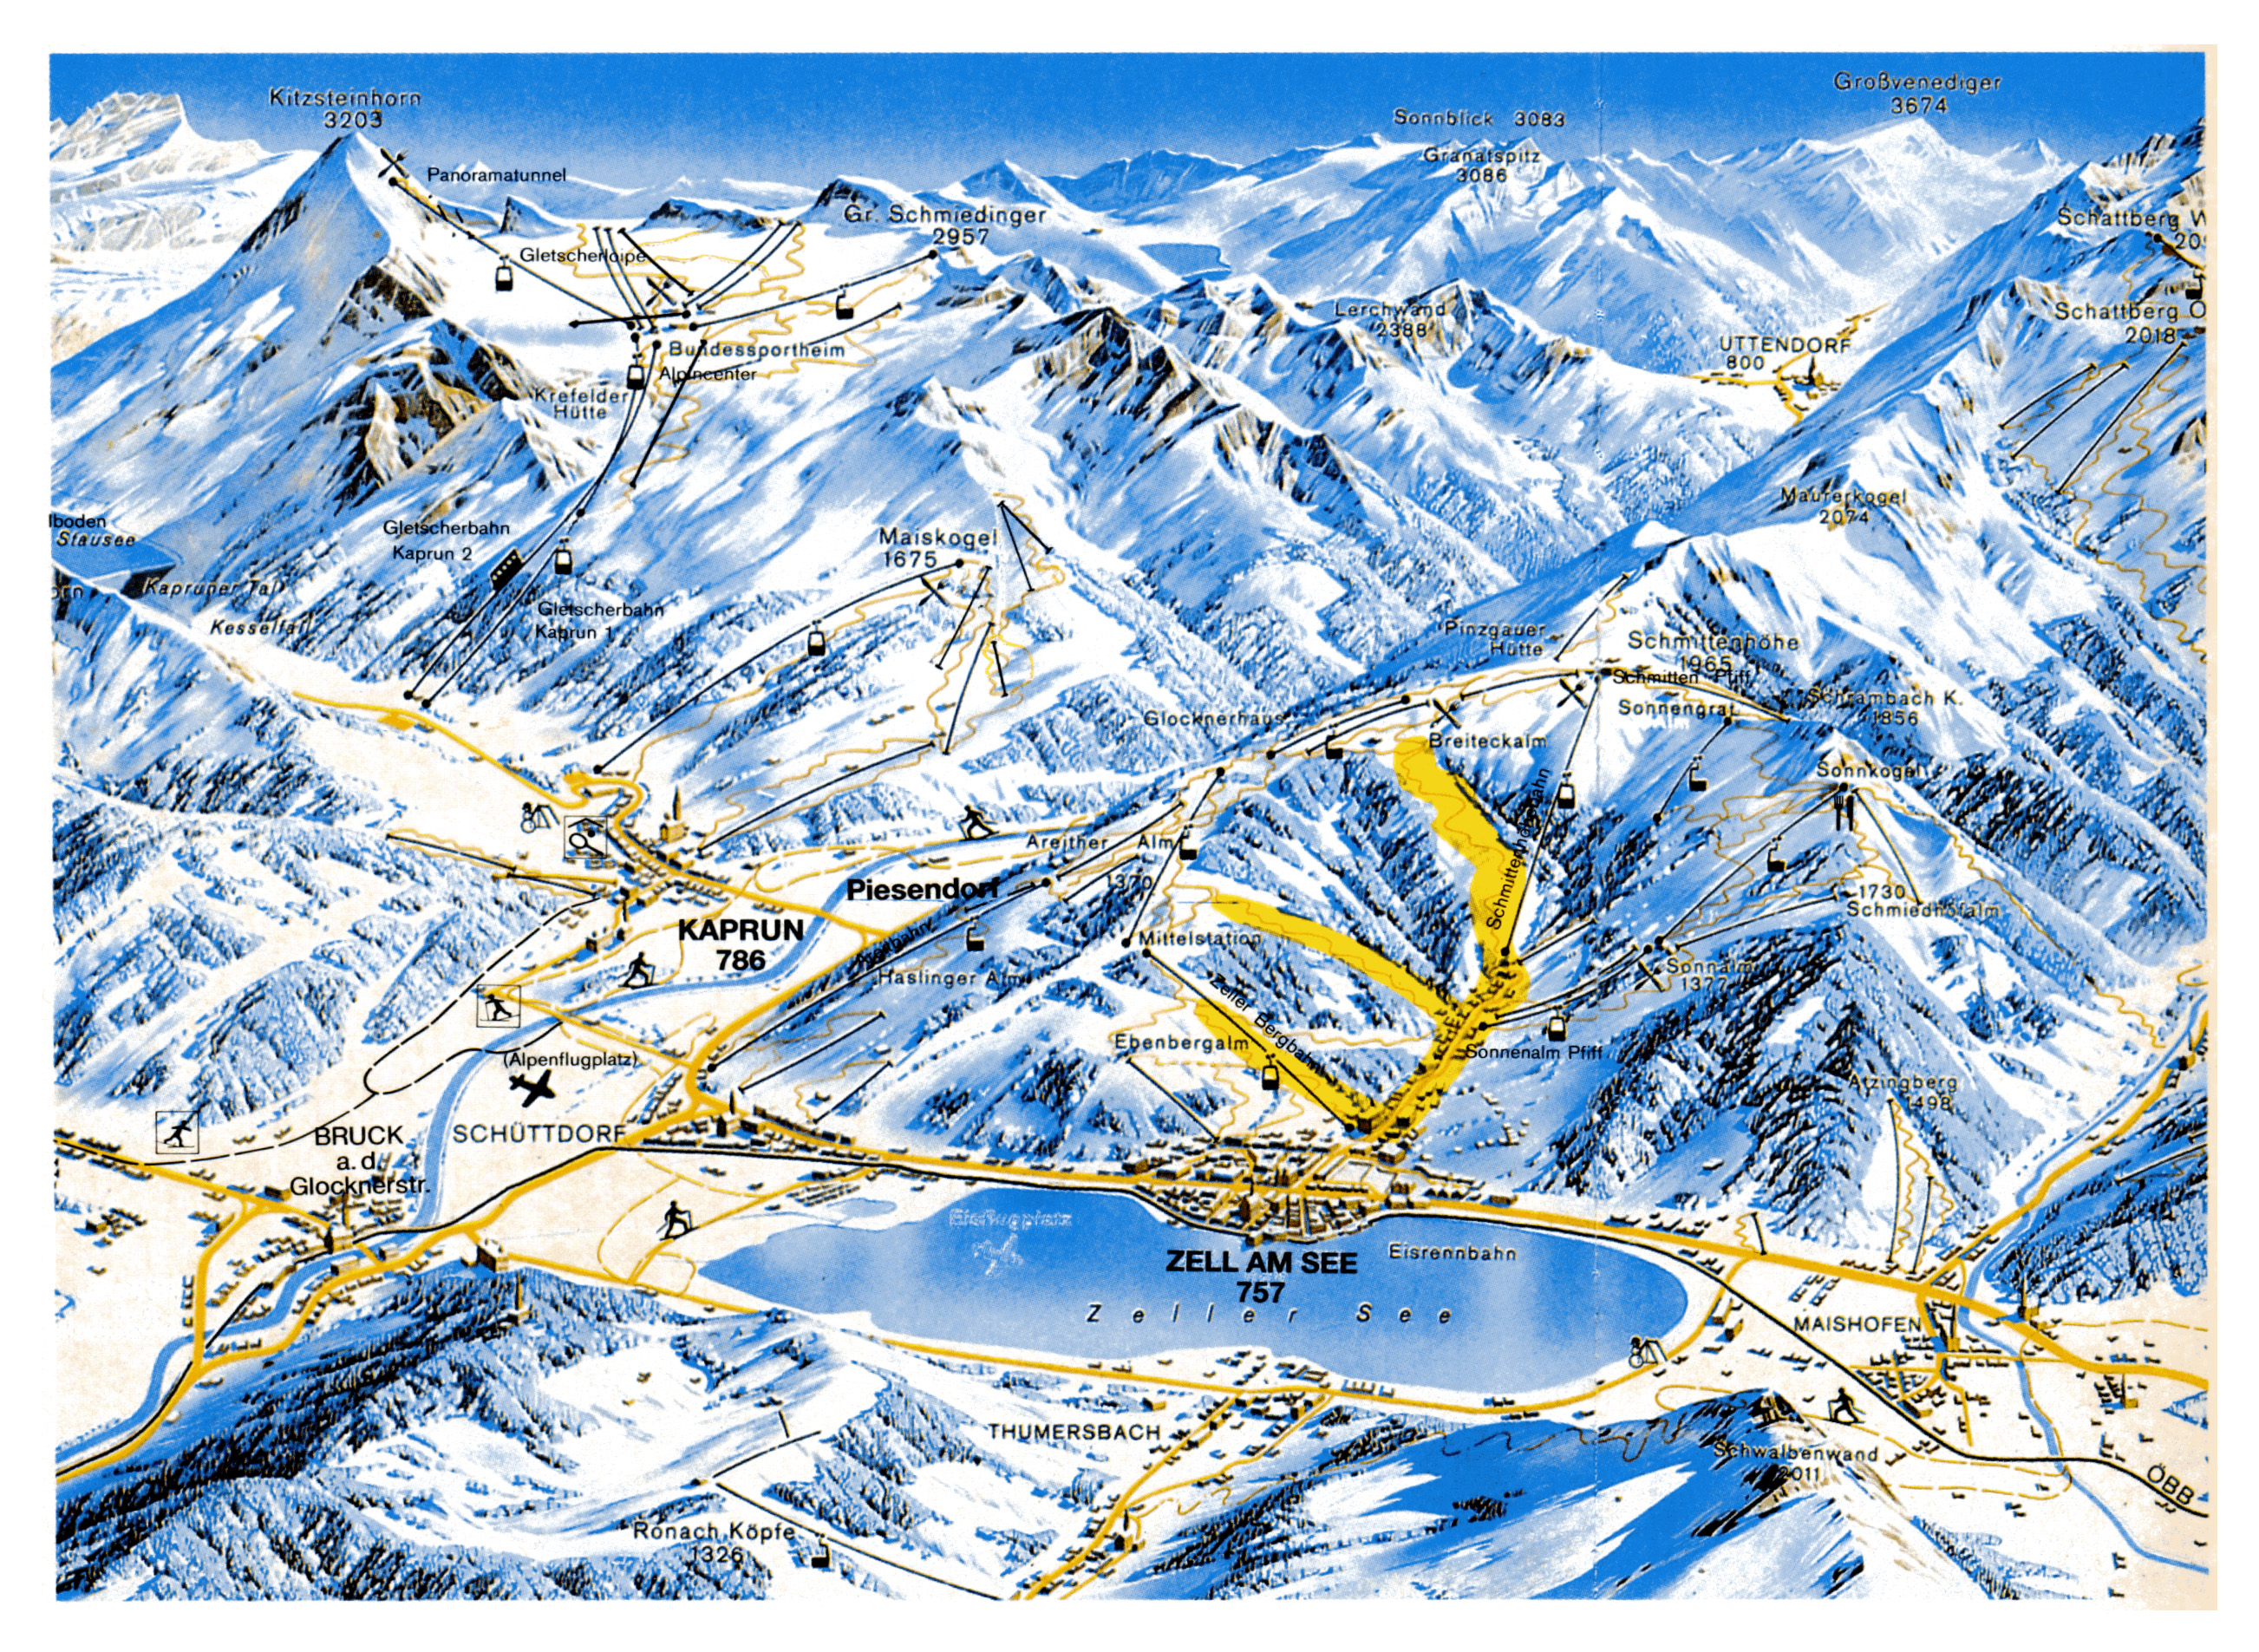 See ski. Zell am see горнолыжный курорт. Китцштайнхорн Австрия. Zell am see схема трасс. Ледник Капрун Австрия.